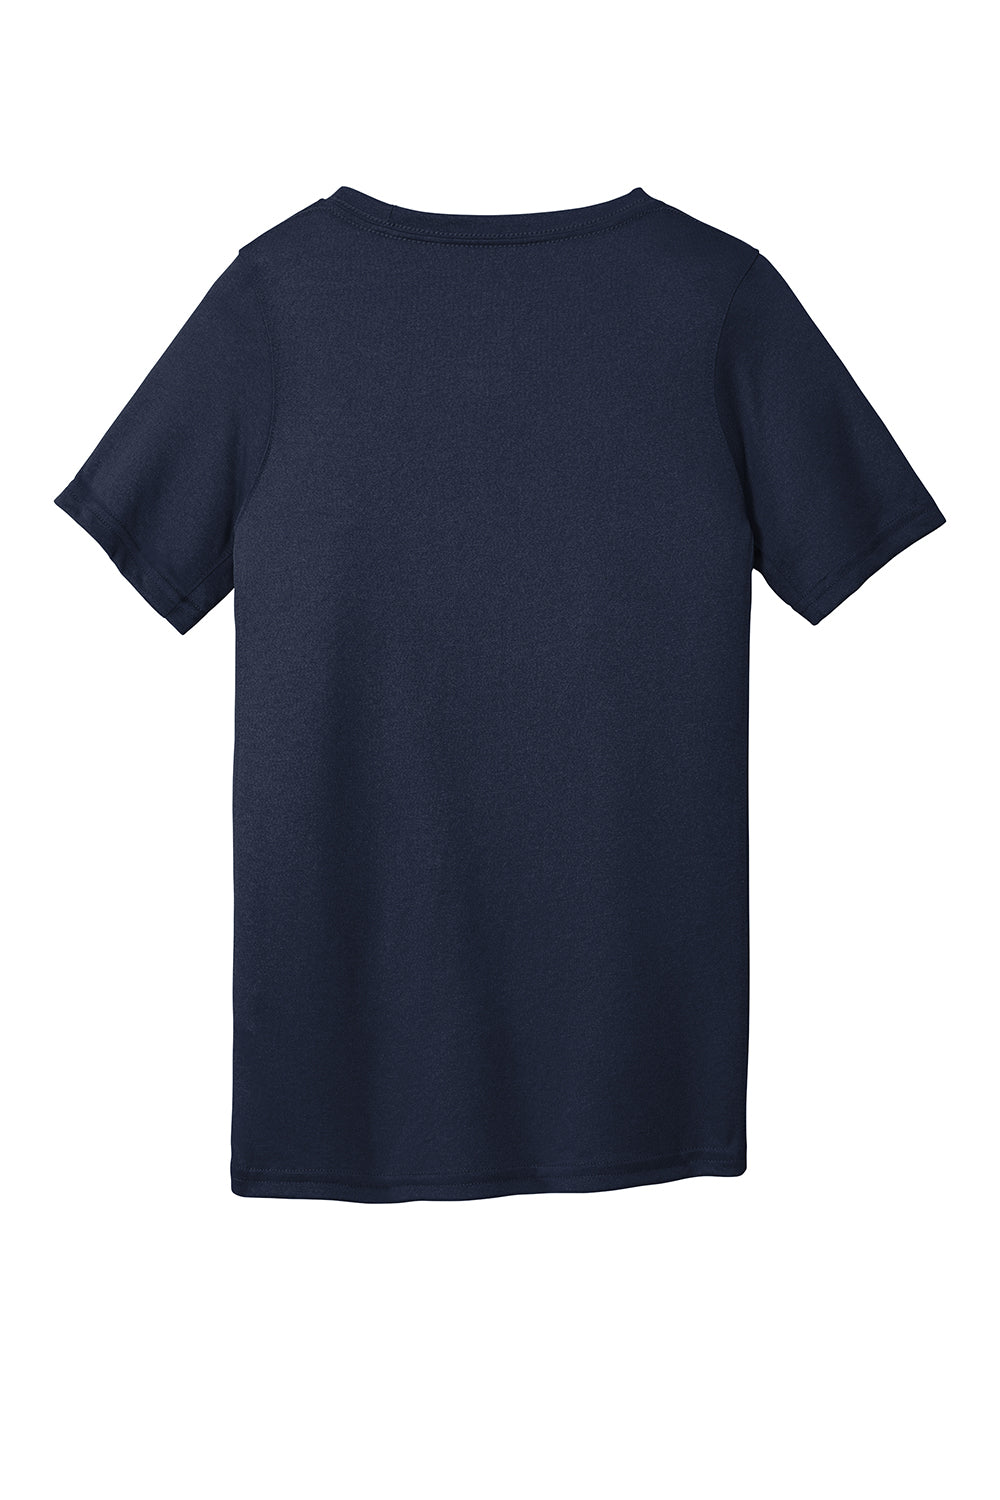 Nike DV7317 Youth Team rLegend Dri-Fit Moisure Wicking Short Sleeve Crewneck T-Shirt College Navy Blue Flat Back